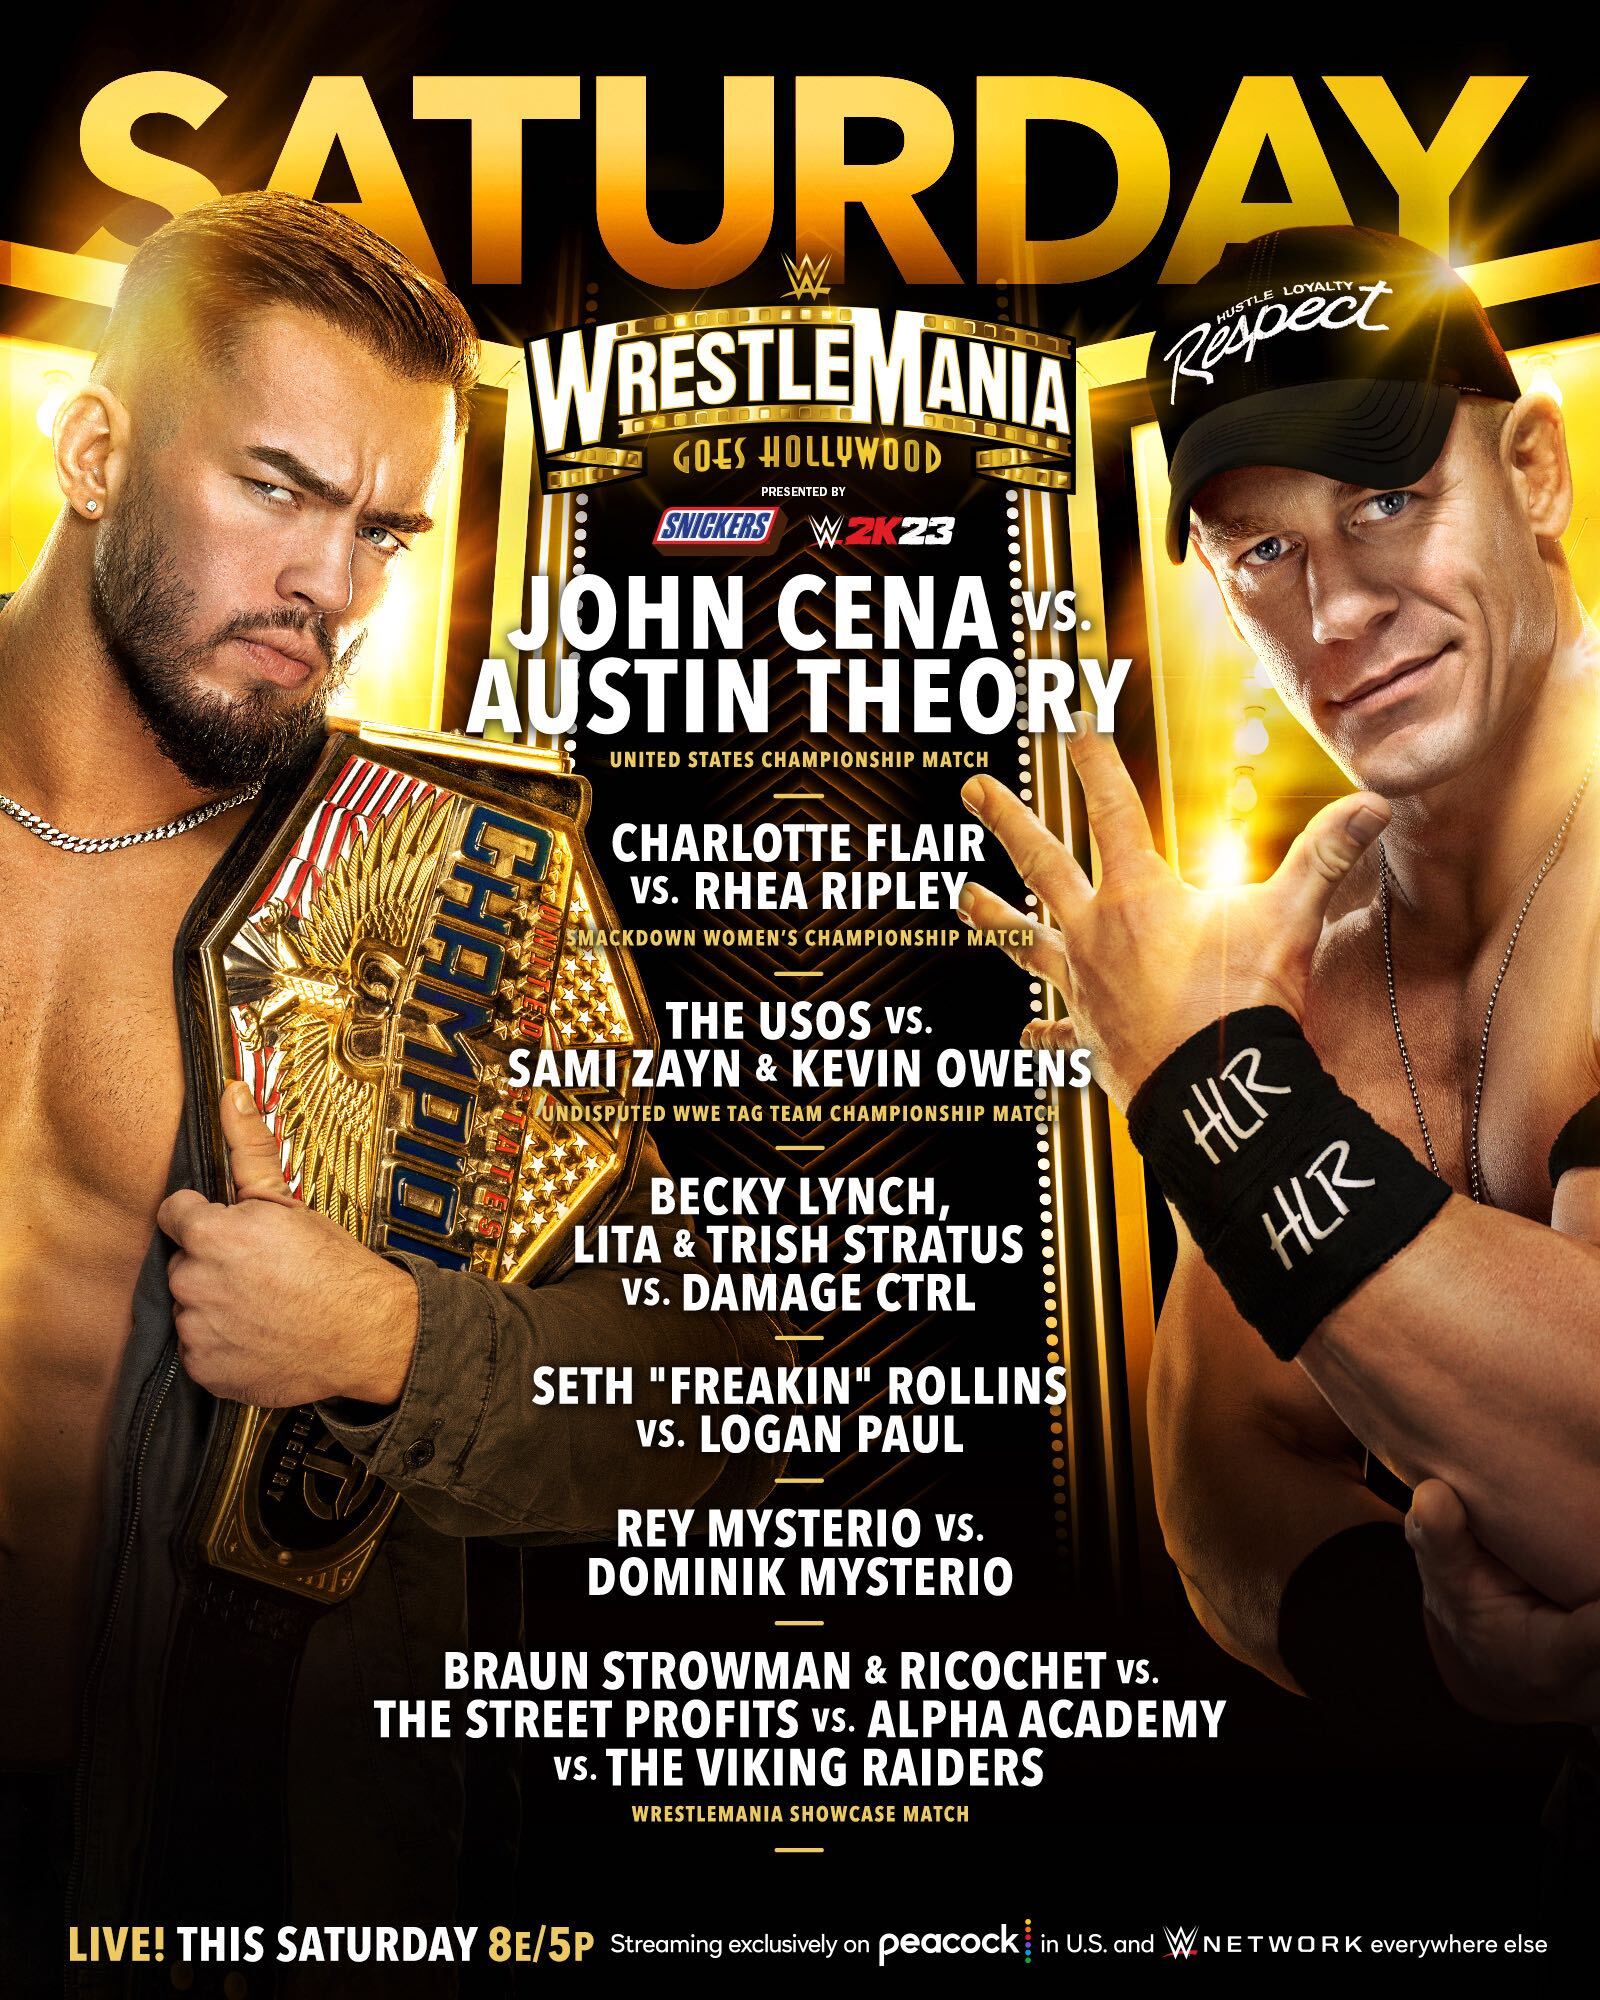 WWE WrestleMania Live Streaming: WWE WrestleMania 39: Date, Time